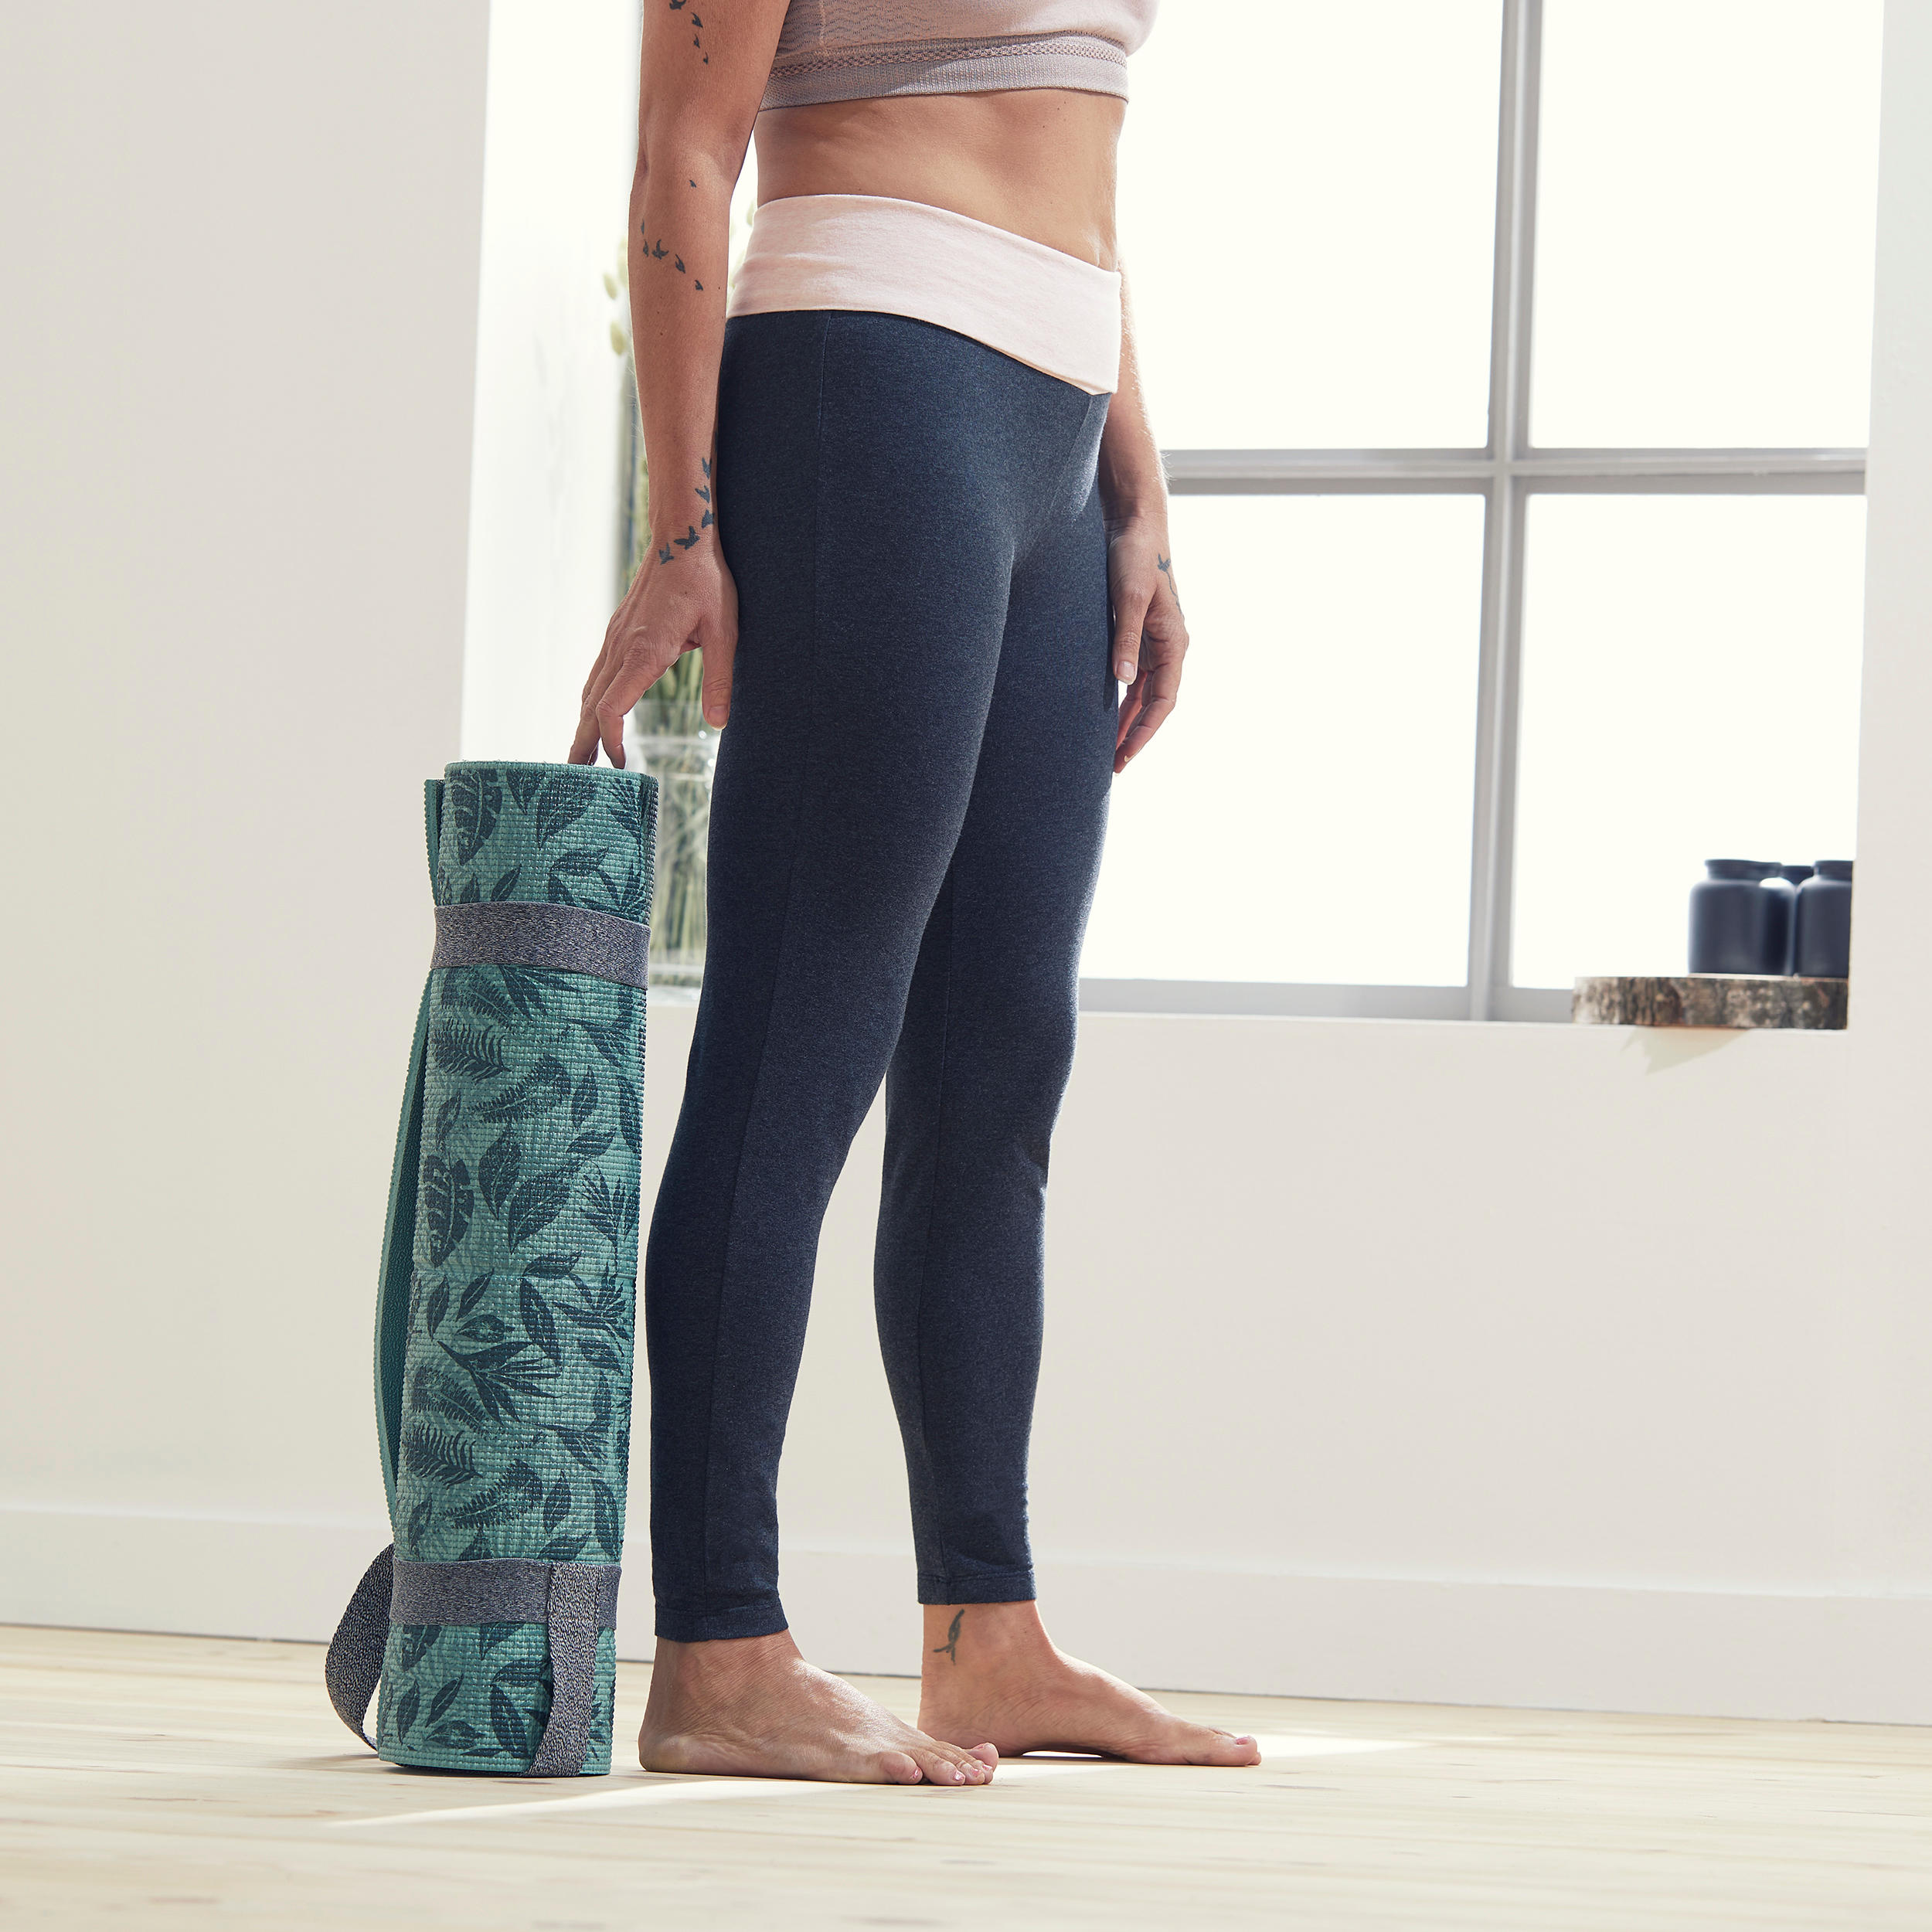 Women's Yoga Cotton Bottoms - Black/Grey - Decathlon